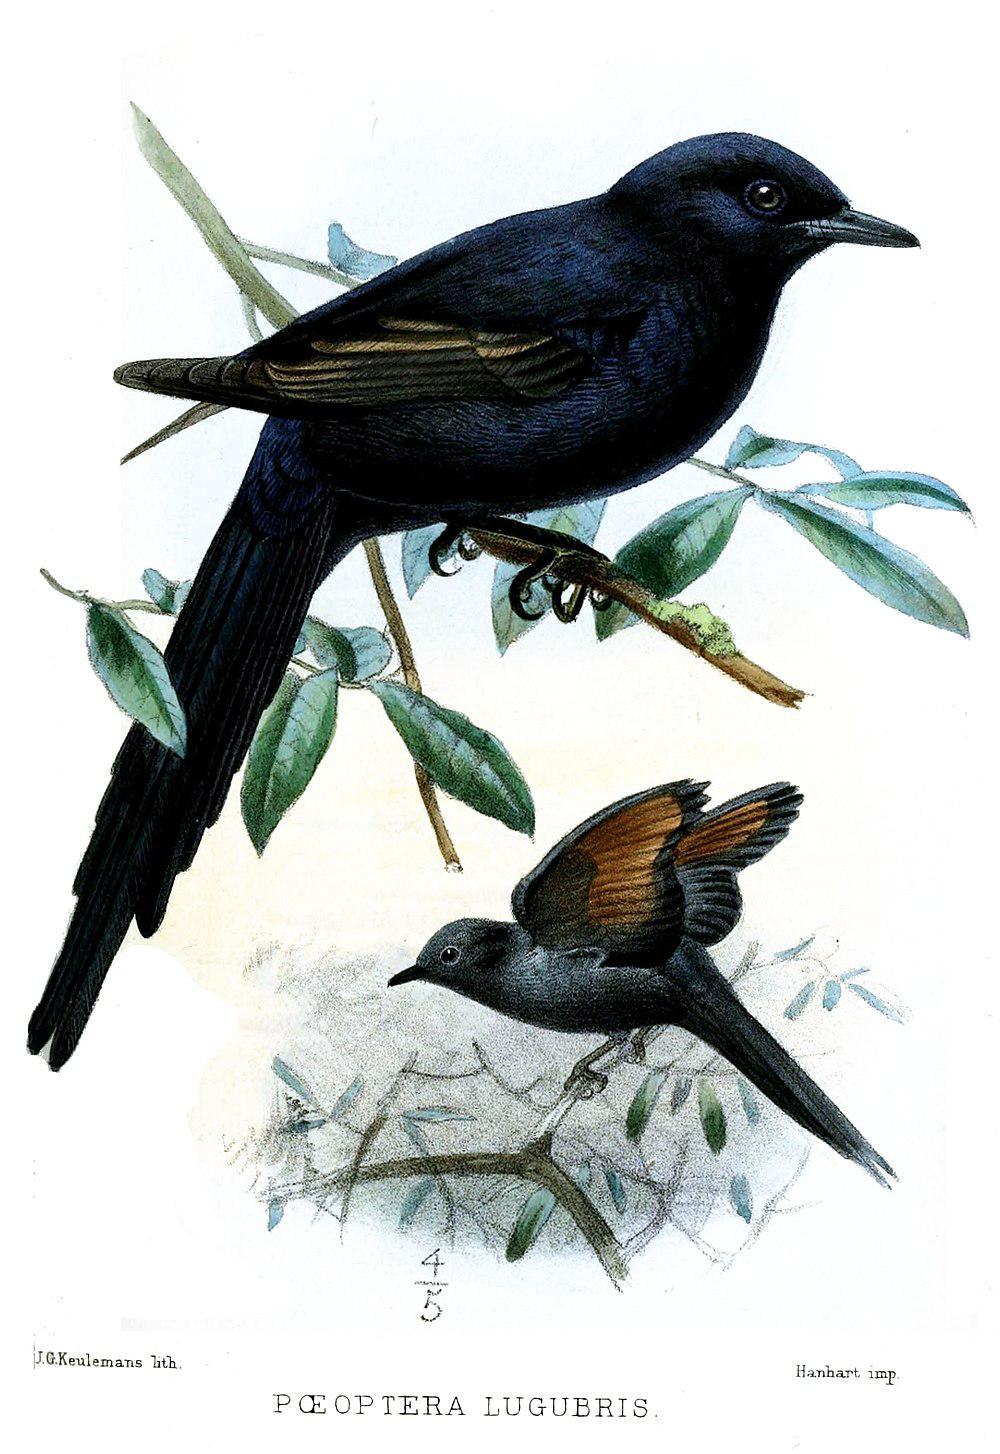 狭尾椋鸟 / Narrow-tailed Starling / Poeoptera lugubris